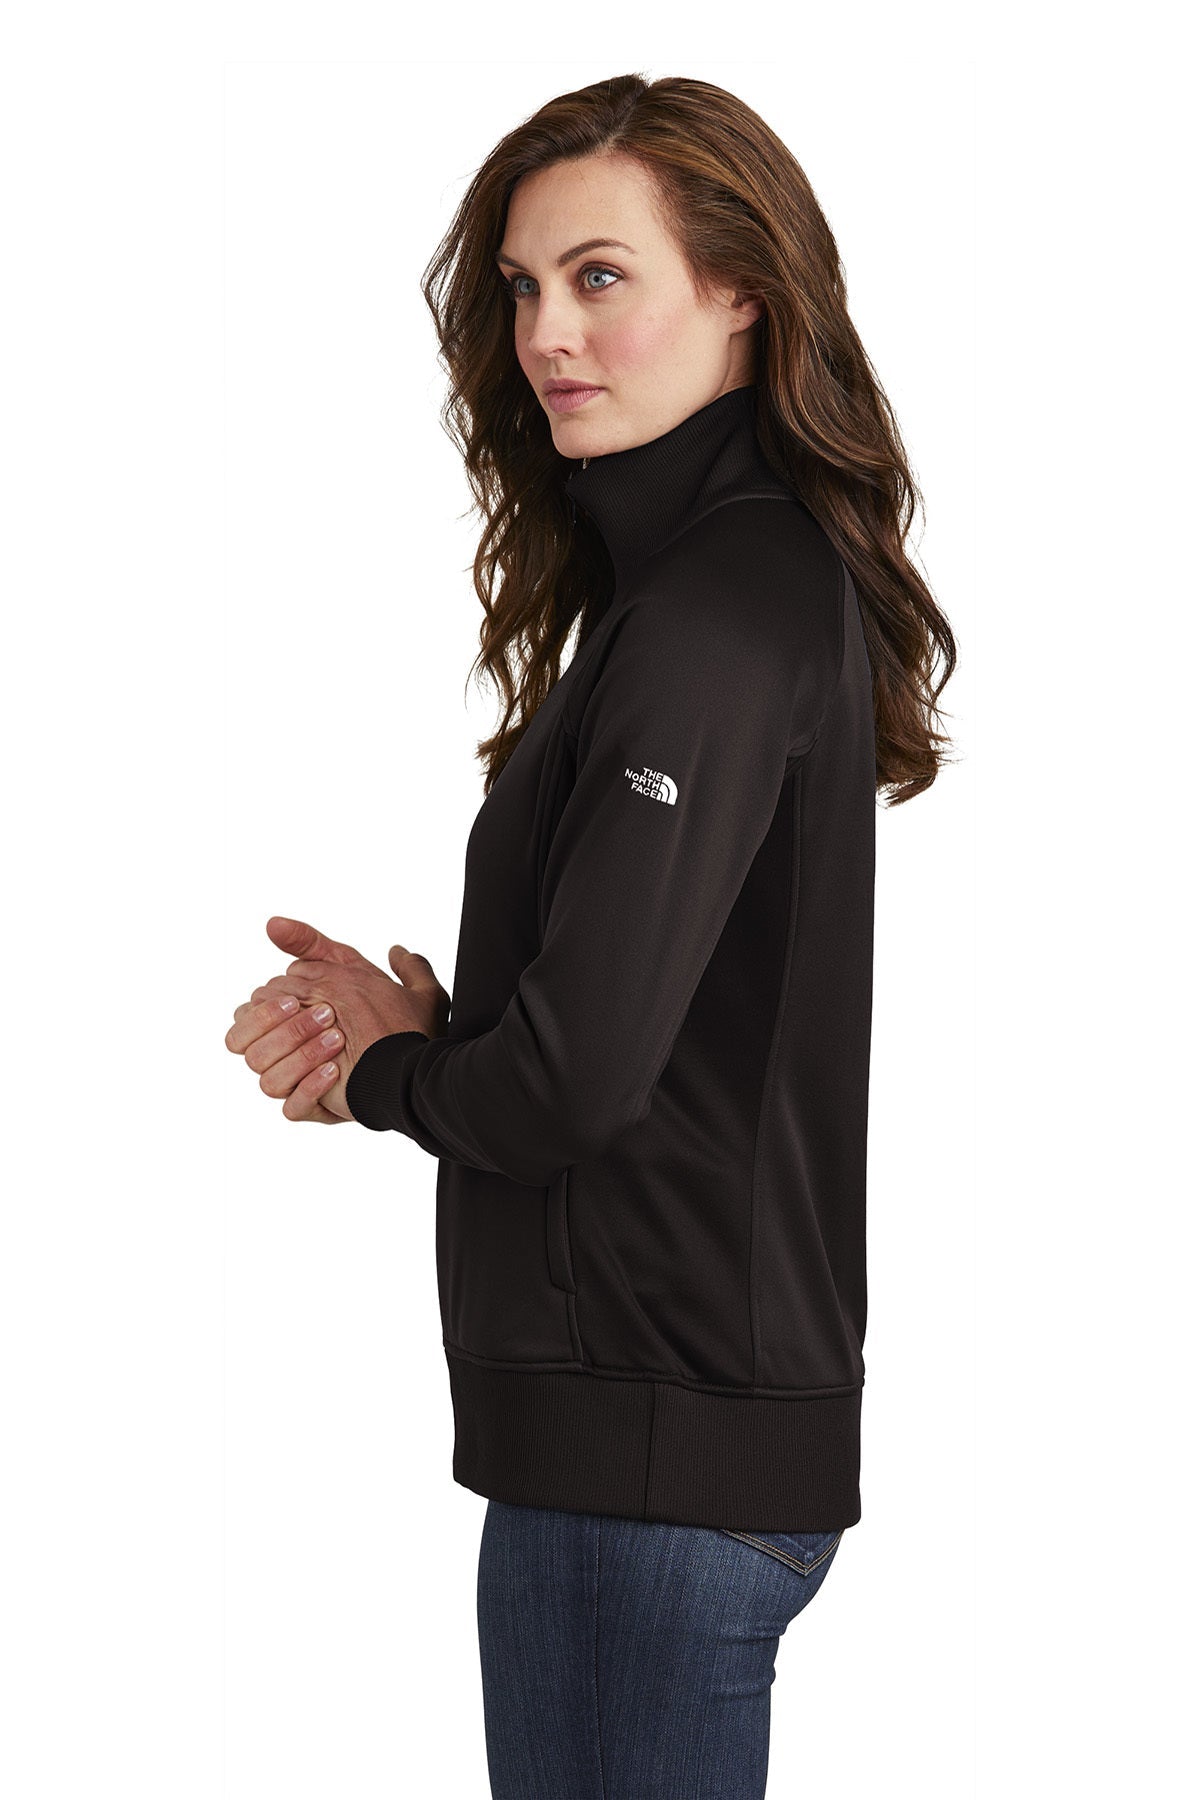 North Face Ladies Tech FullZip Fleece Jacket TNF Black